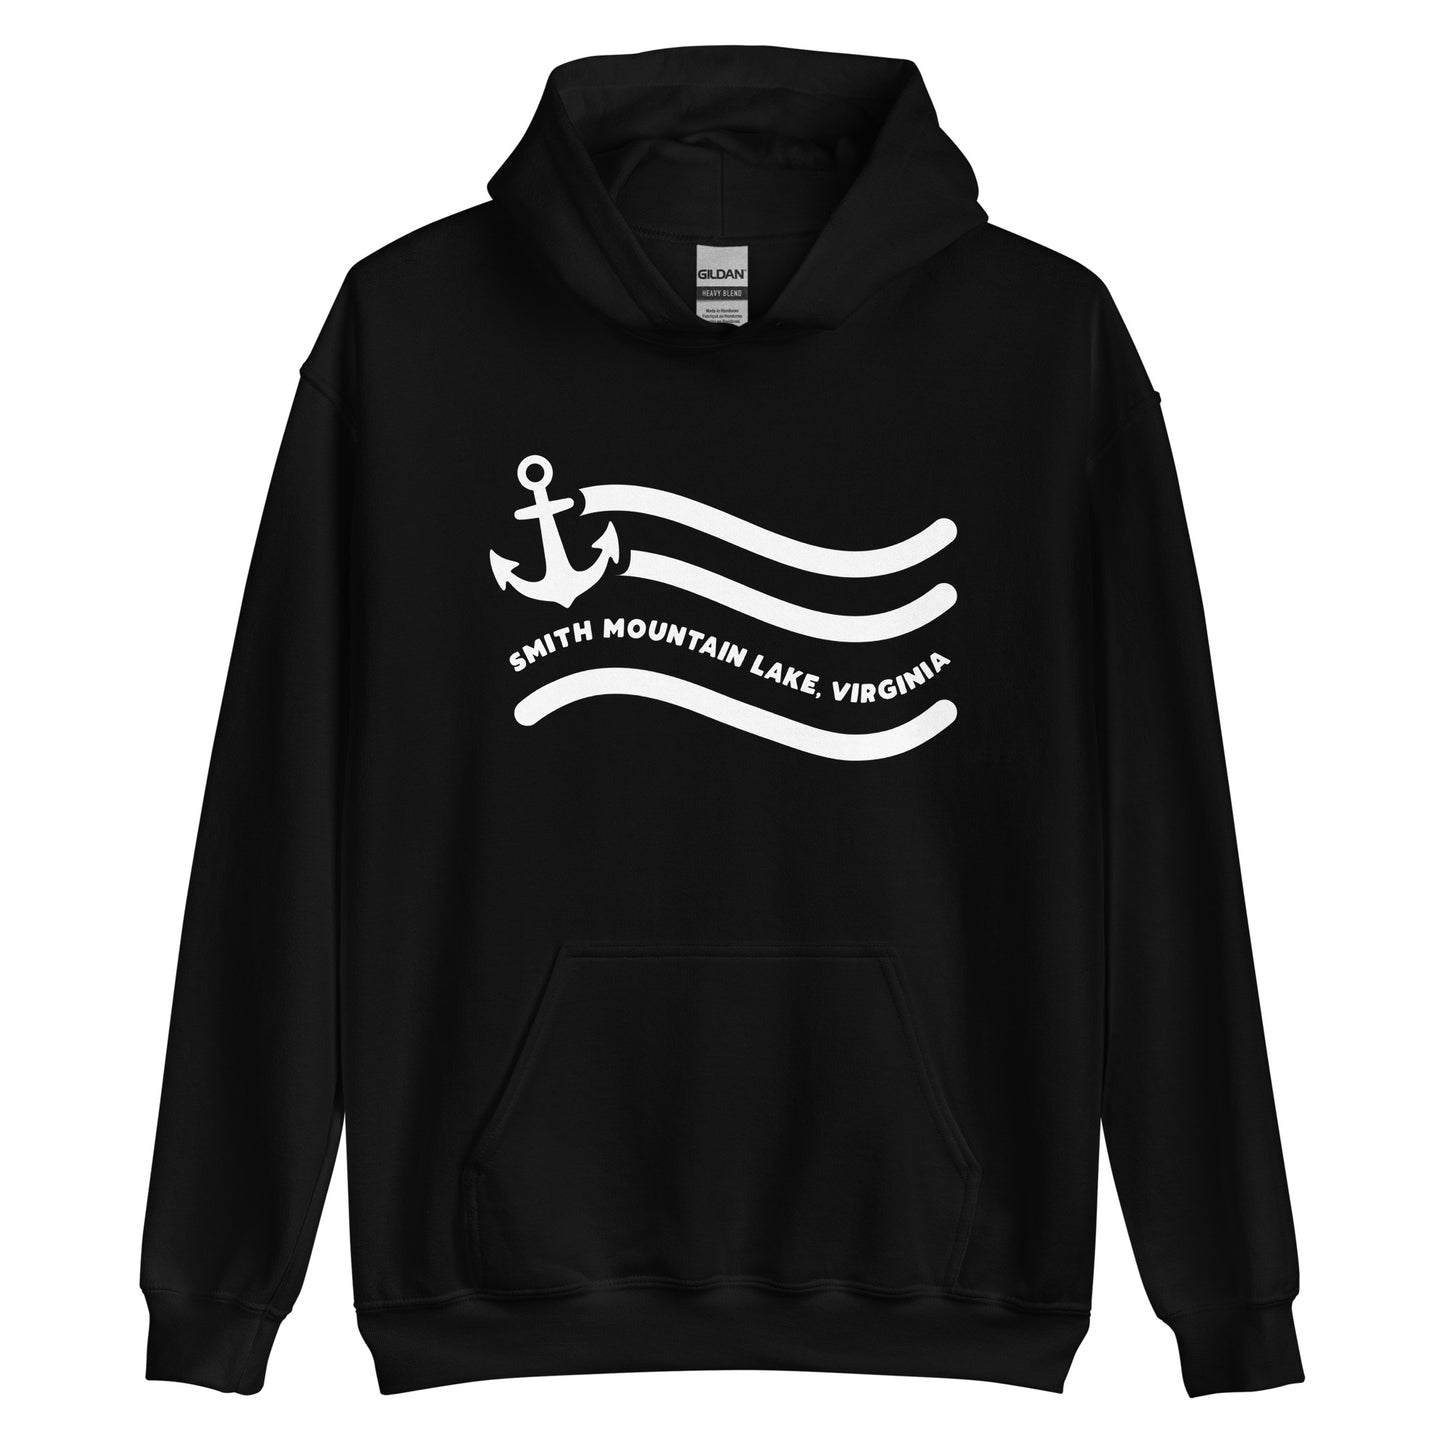 Smith Mountain Lake Anchor + Waves Unisex Hoodie Sweatshirt